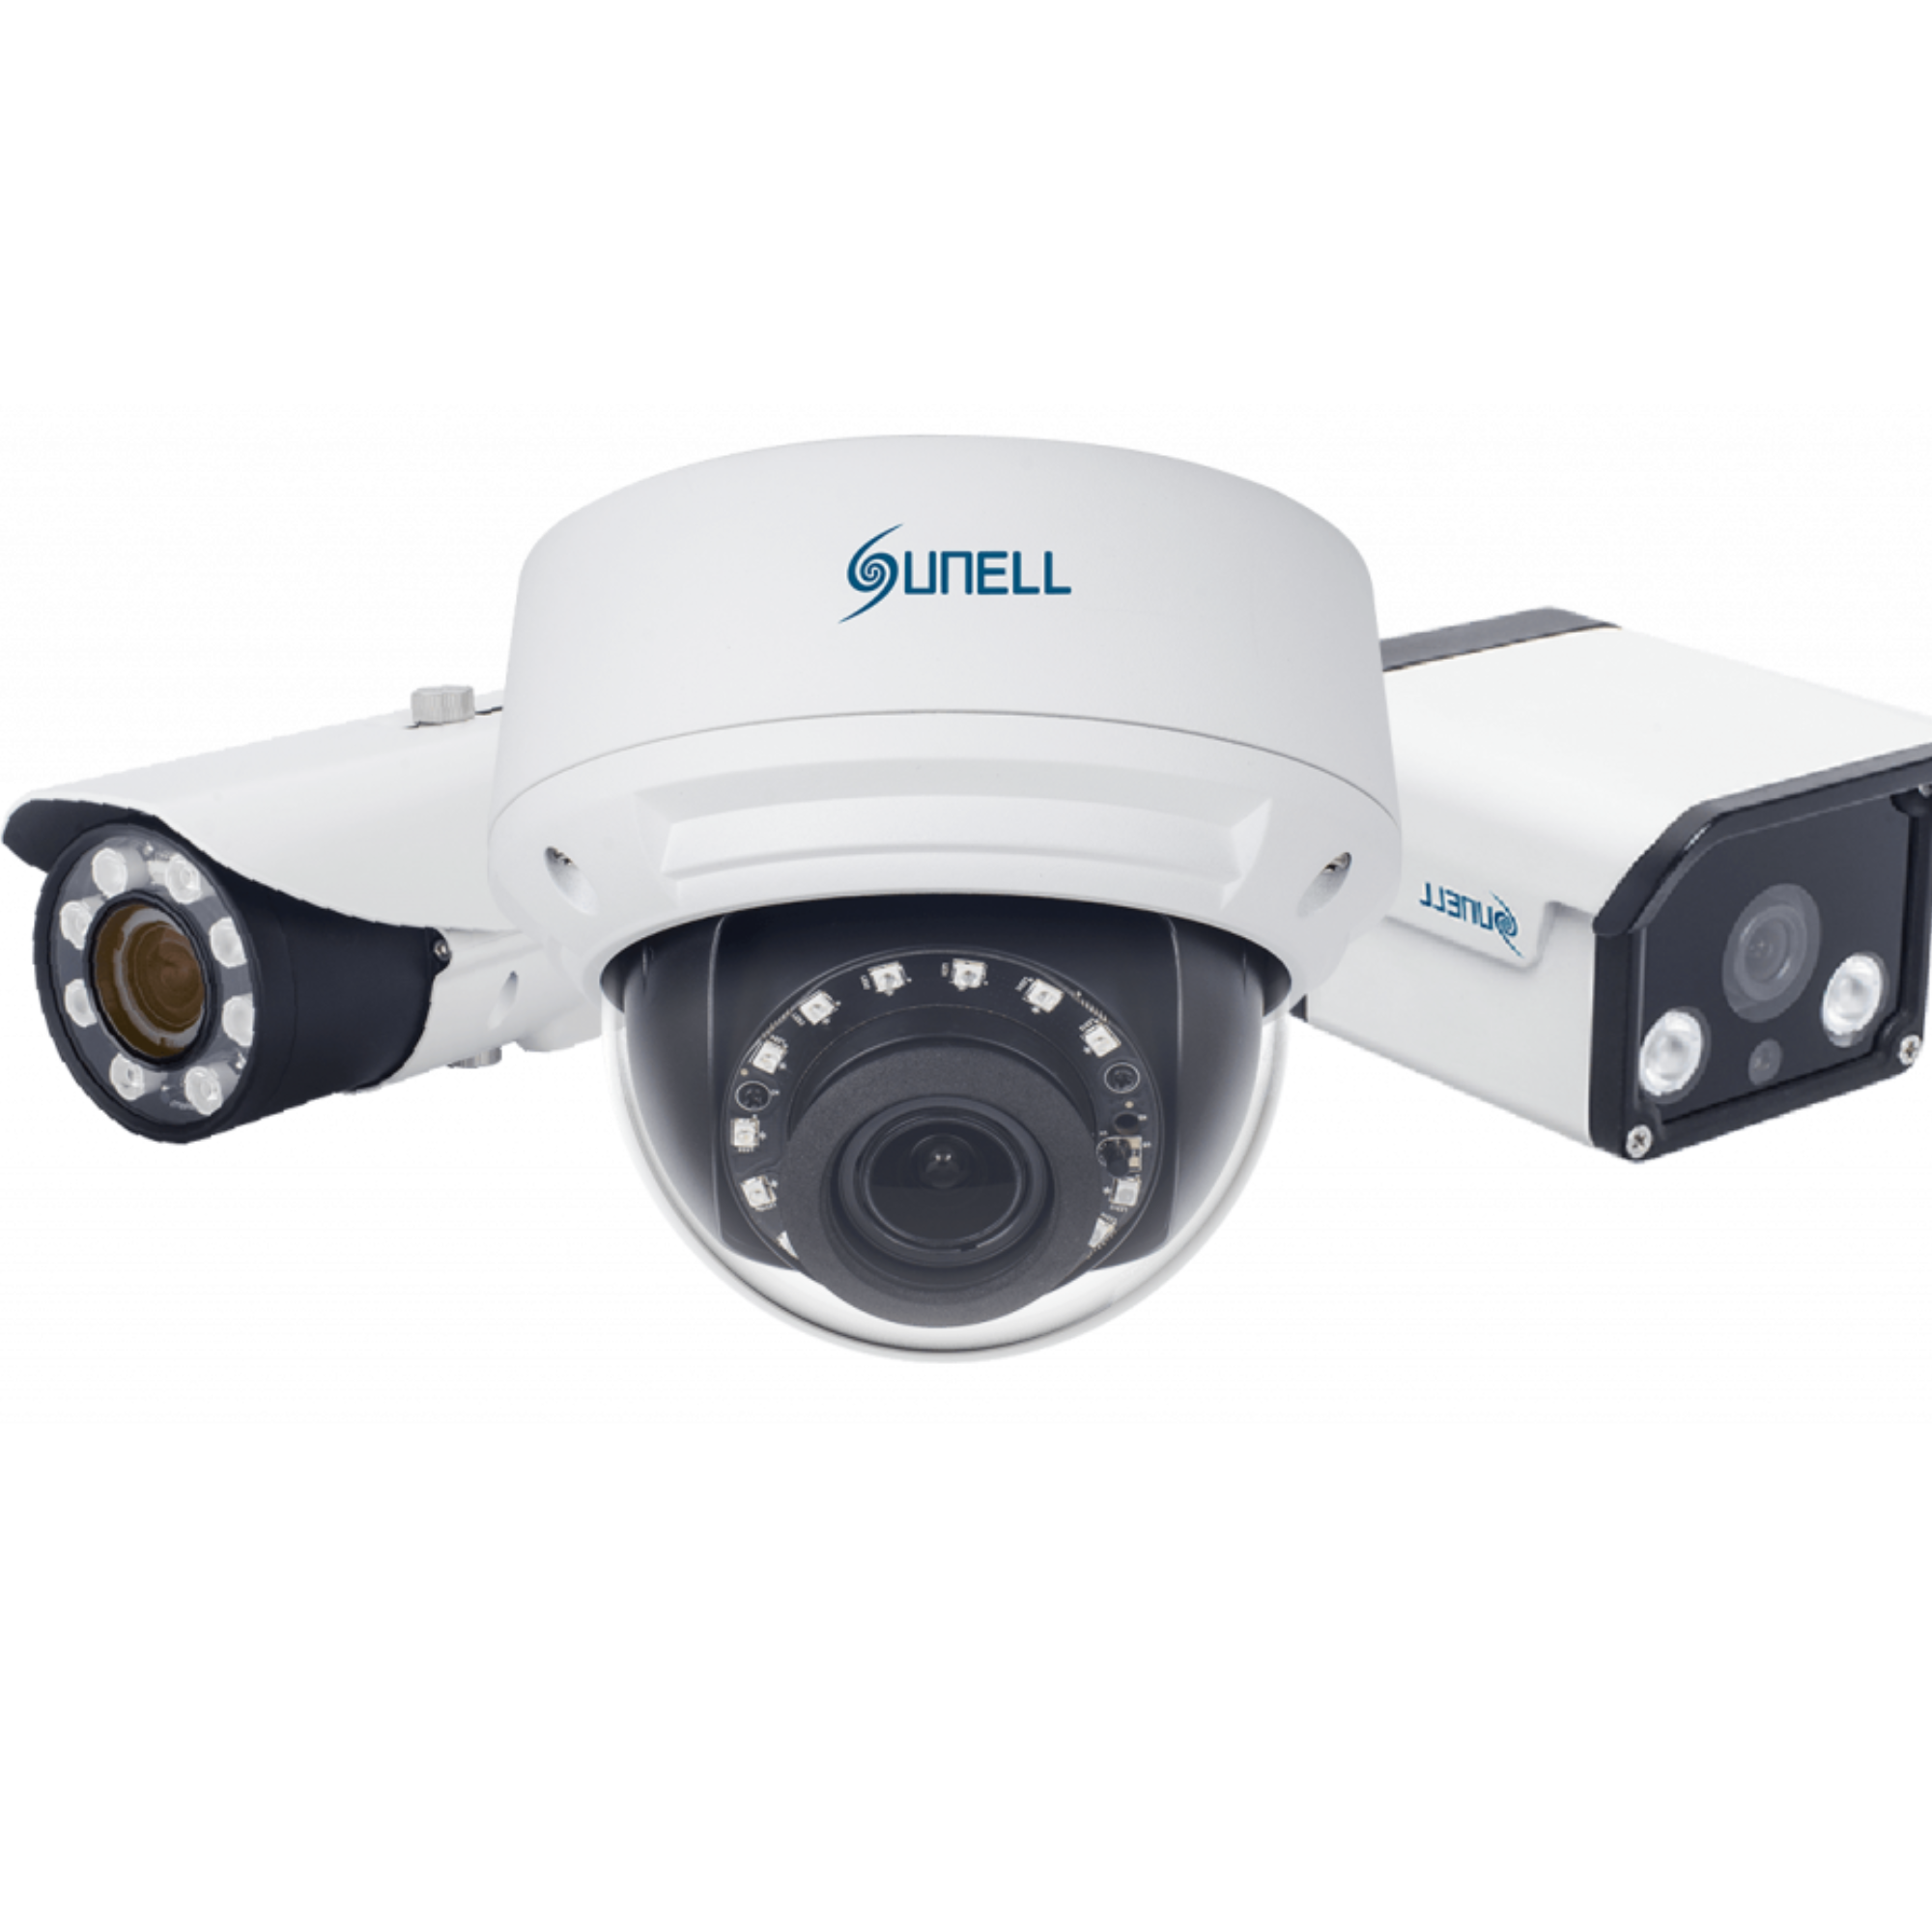 Sunell - Surveillance Clearance